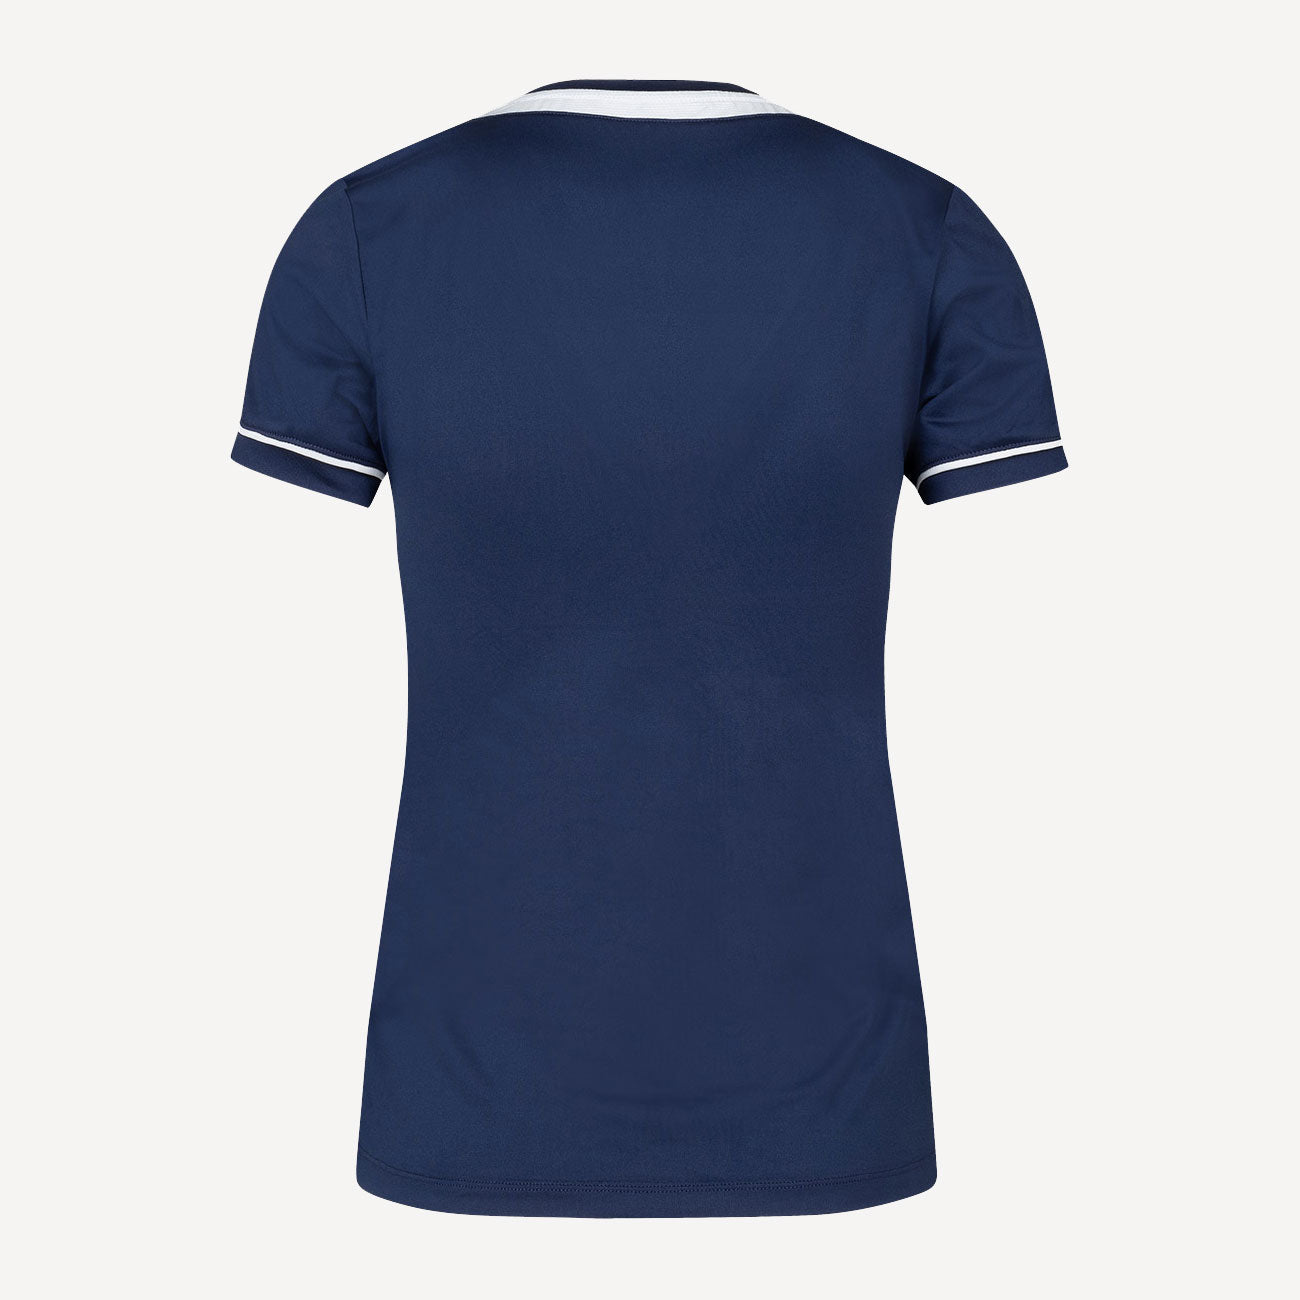 Robey Match Girls' Tennis Shirt - TC Nieuwerkerk Dark Blue (2)